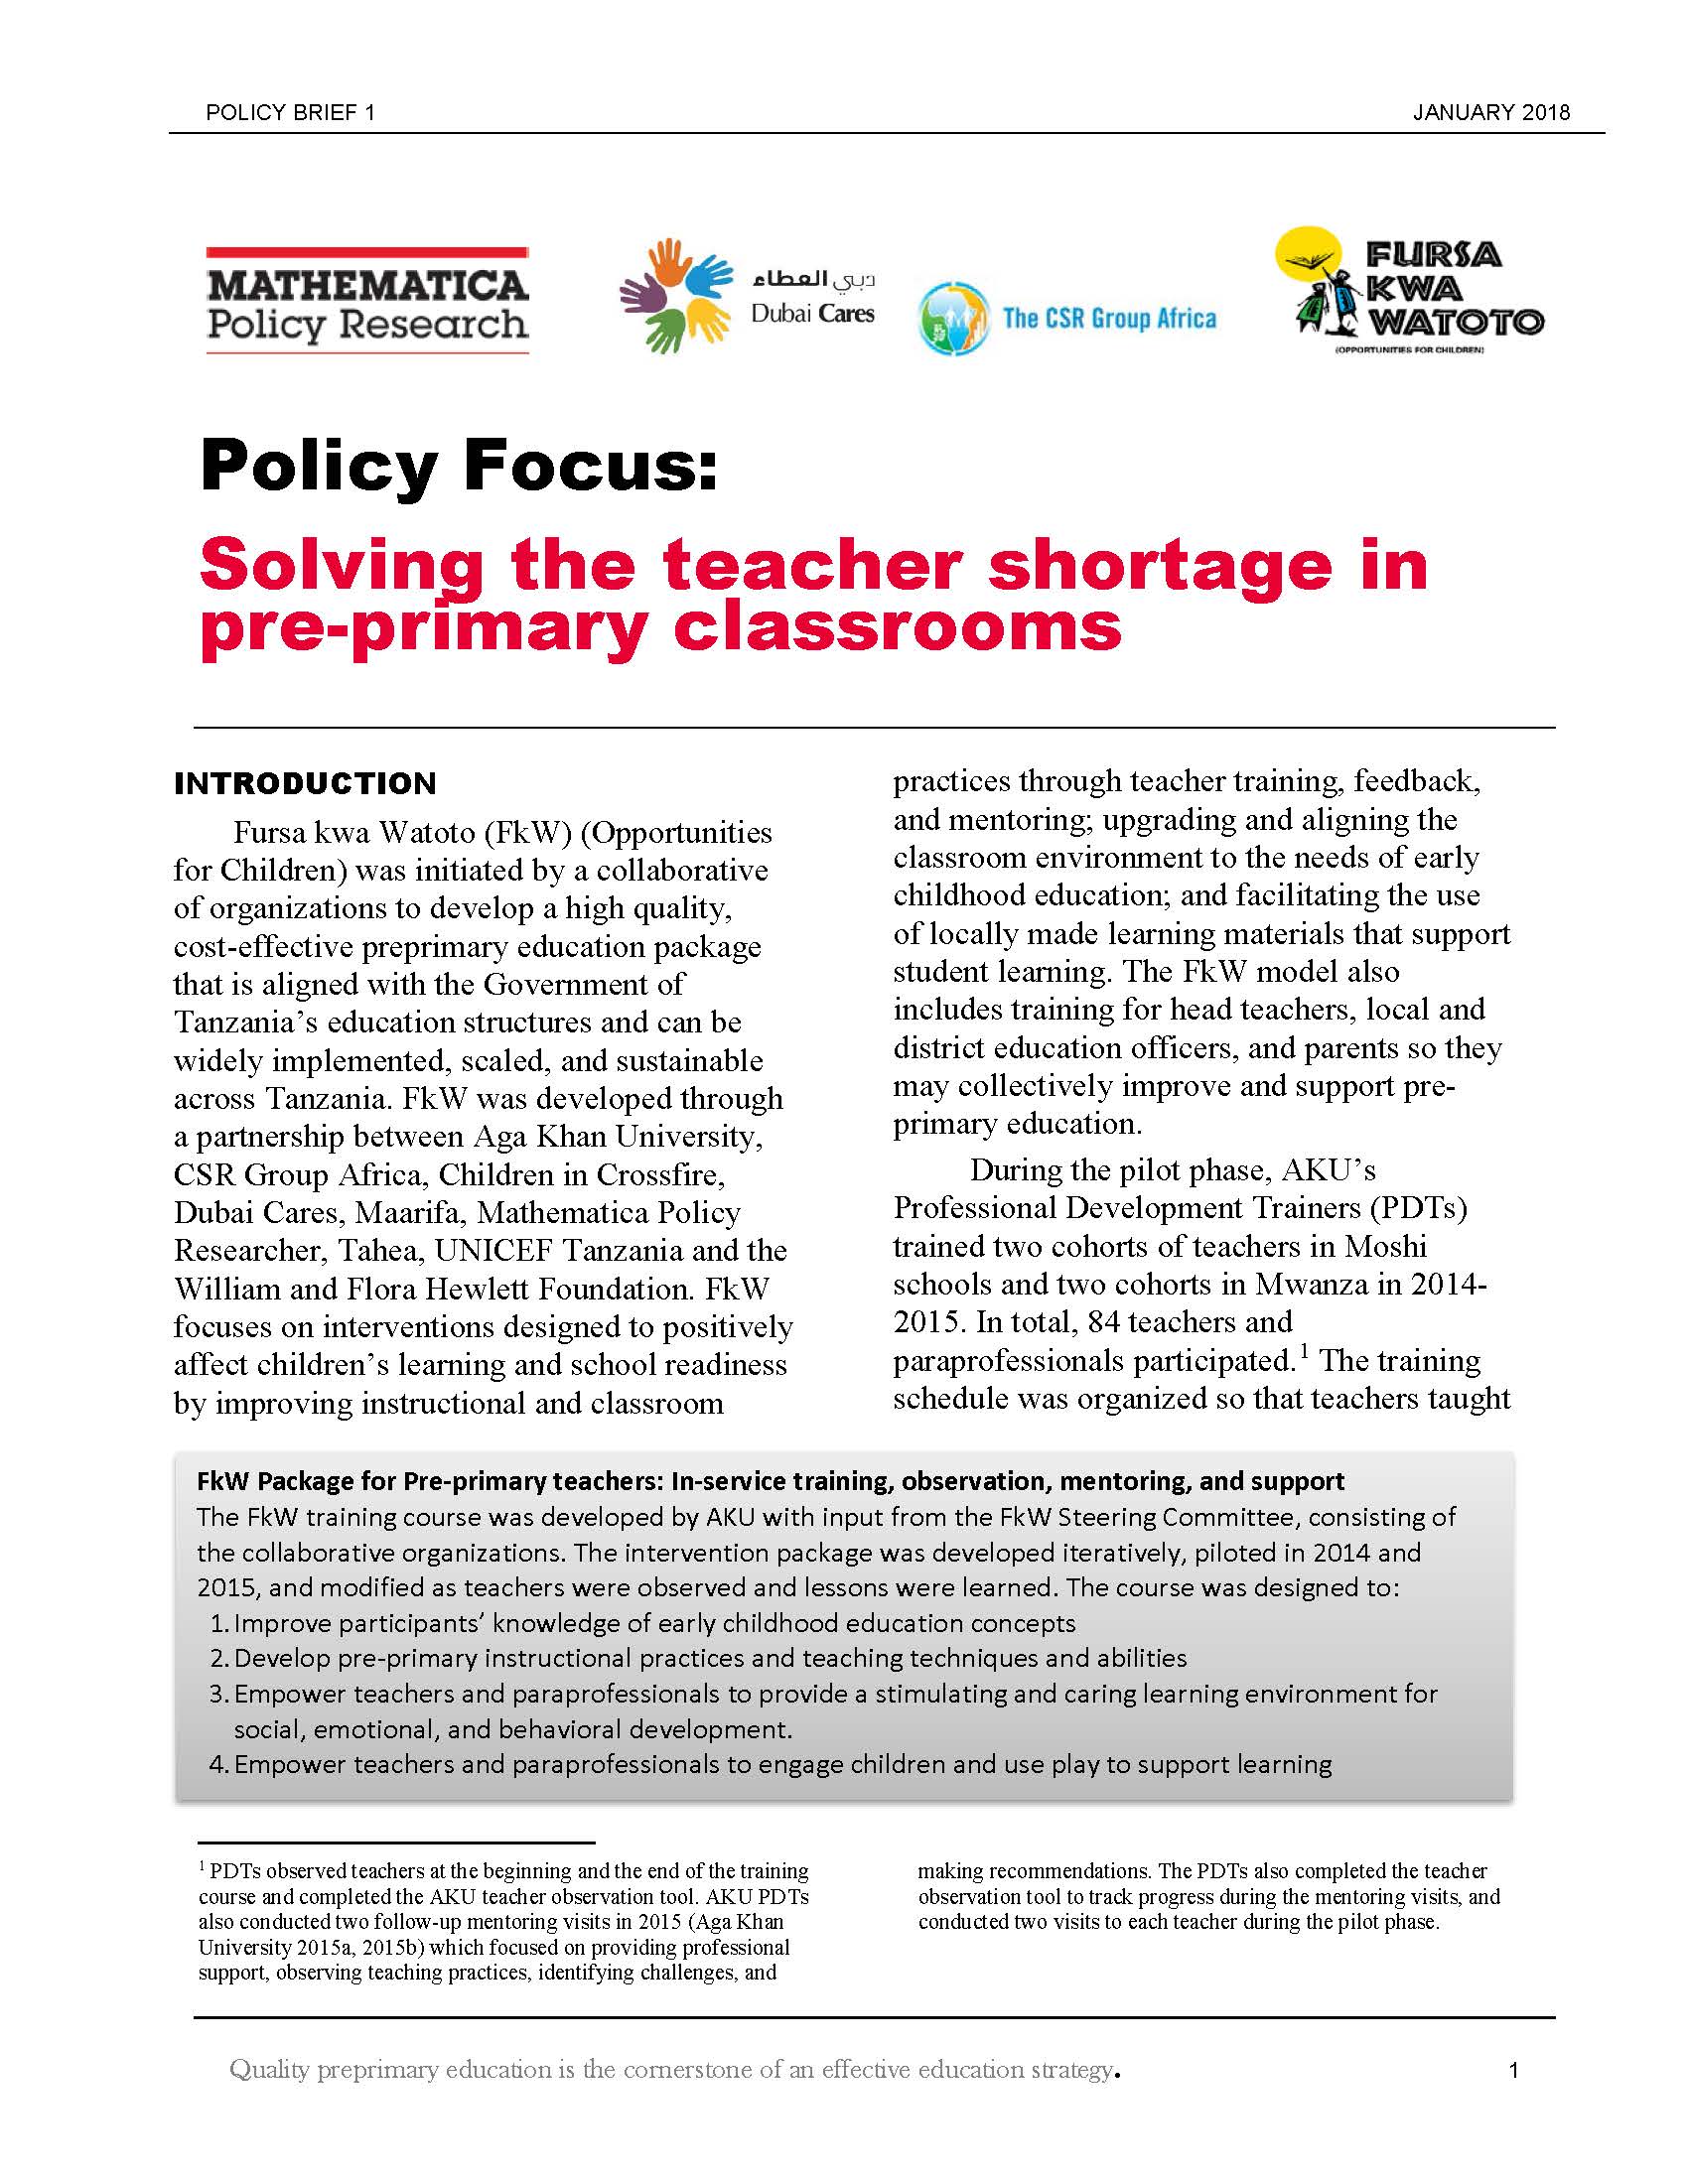 Policy Focus: Solving the Teacher Shortage (Brief)